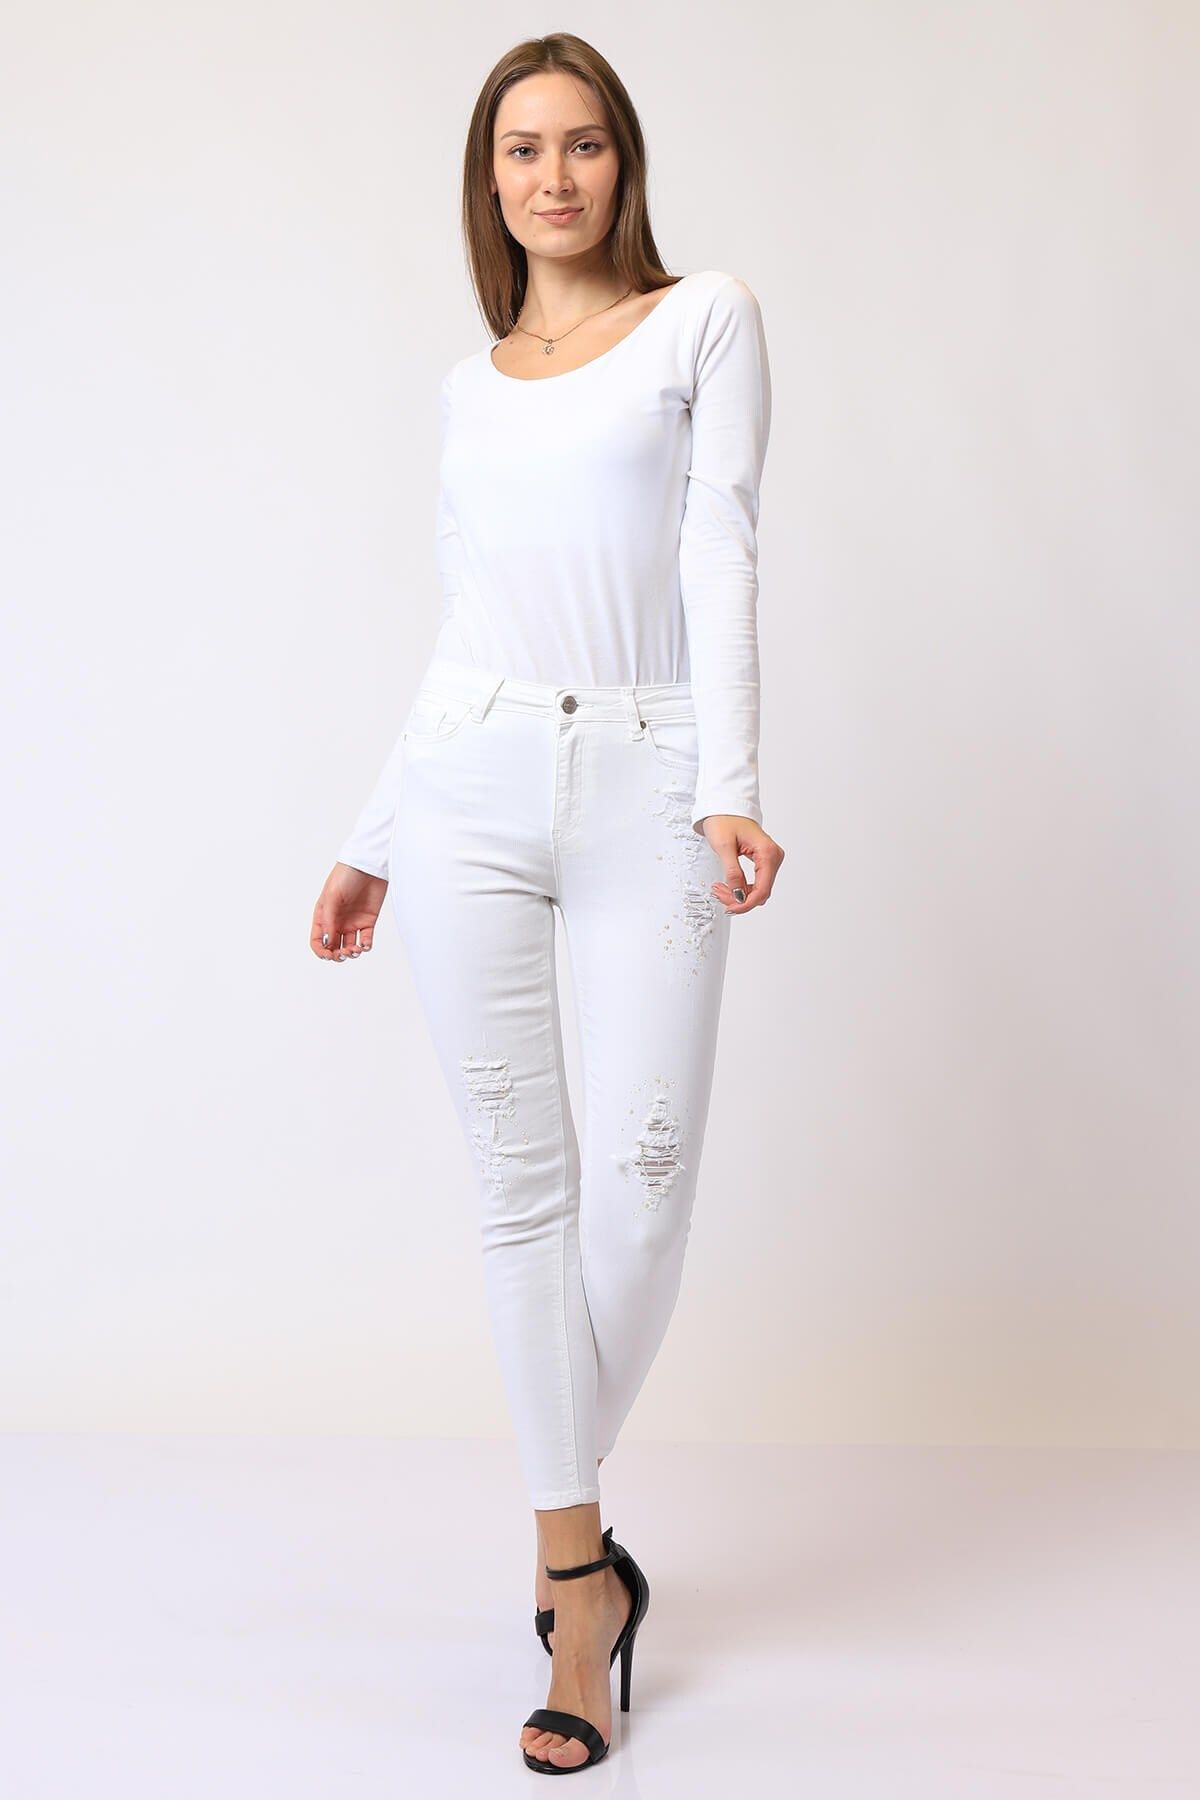 Twister Jeans Kadın Slim Fit Yüksek Bel Pantolon Mindy 9205-01 01